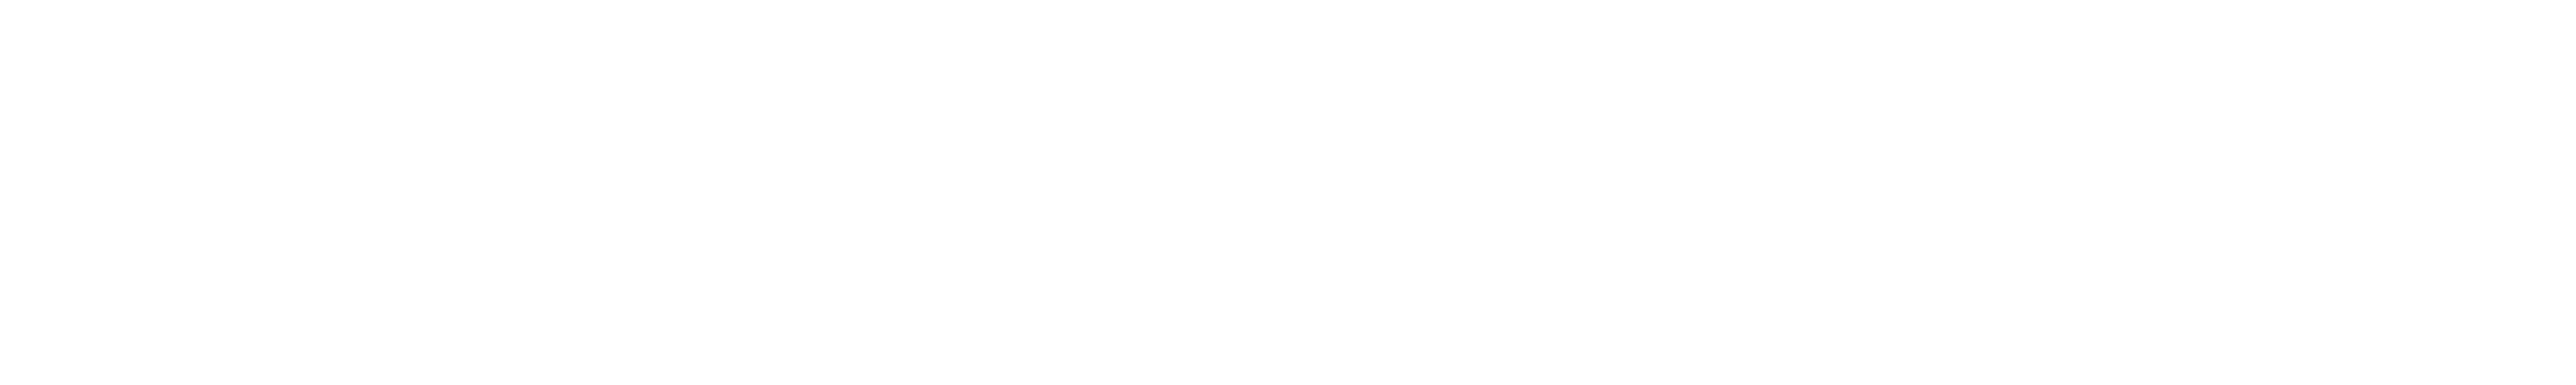 Windows Pro Logo - Windows 10 Migration | XMA